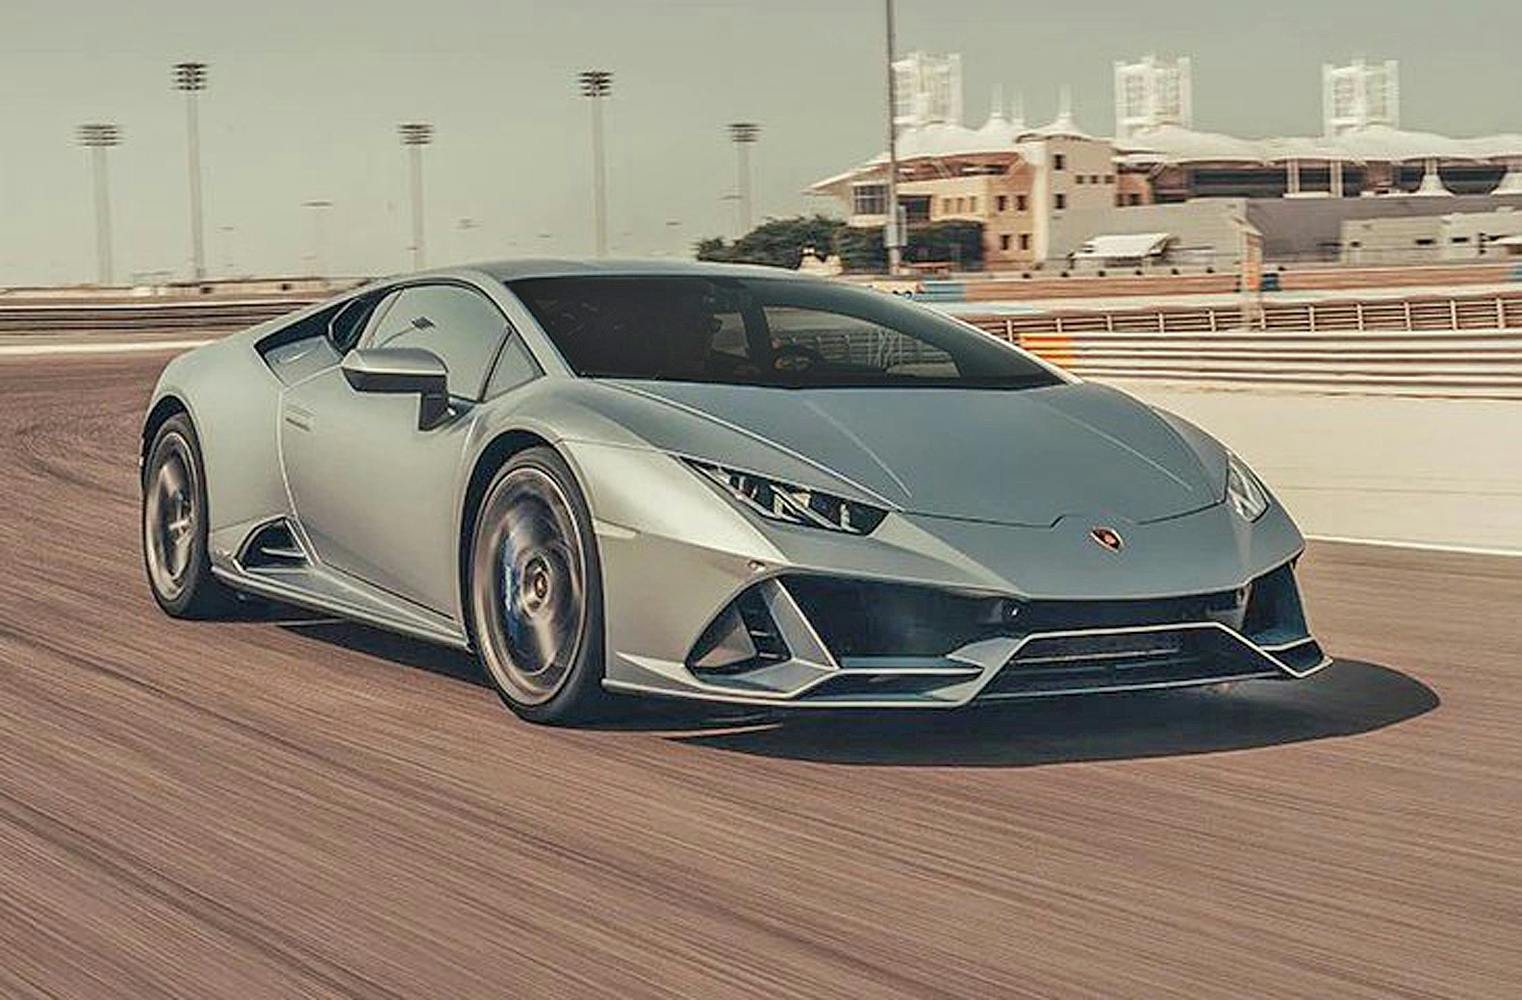 Lamborghini Huracán Evo selber fahren | 2 Runden Rennstrecke